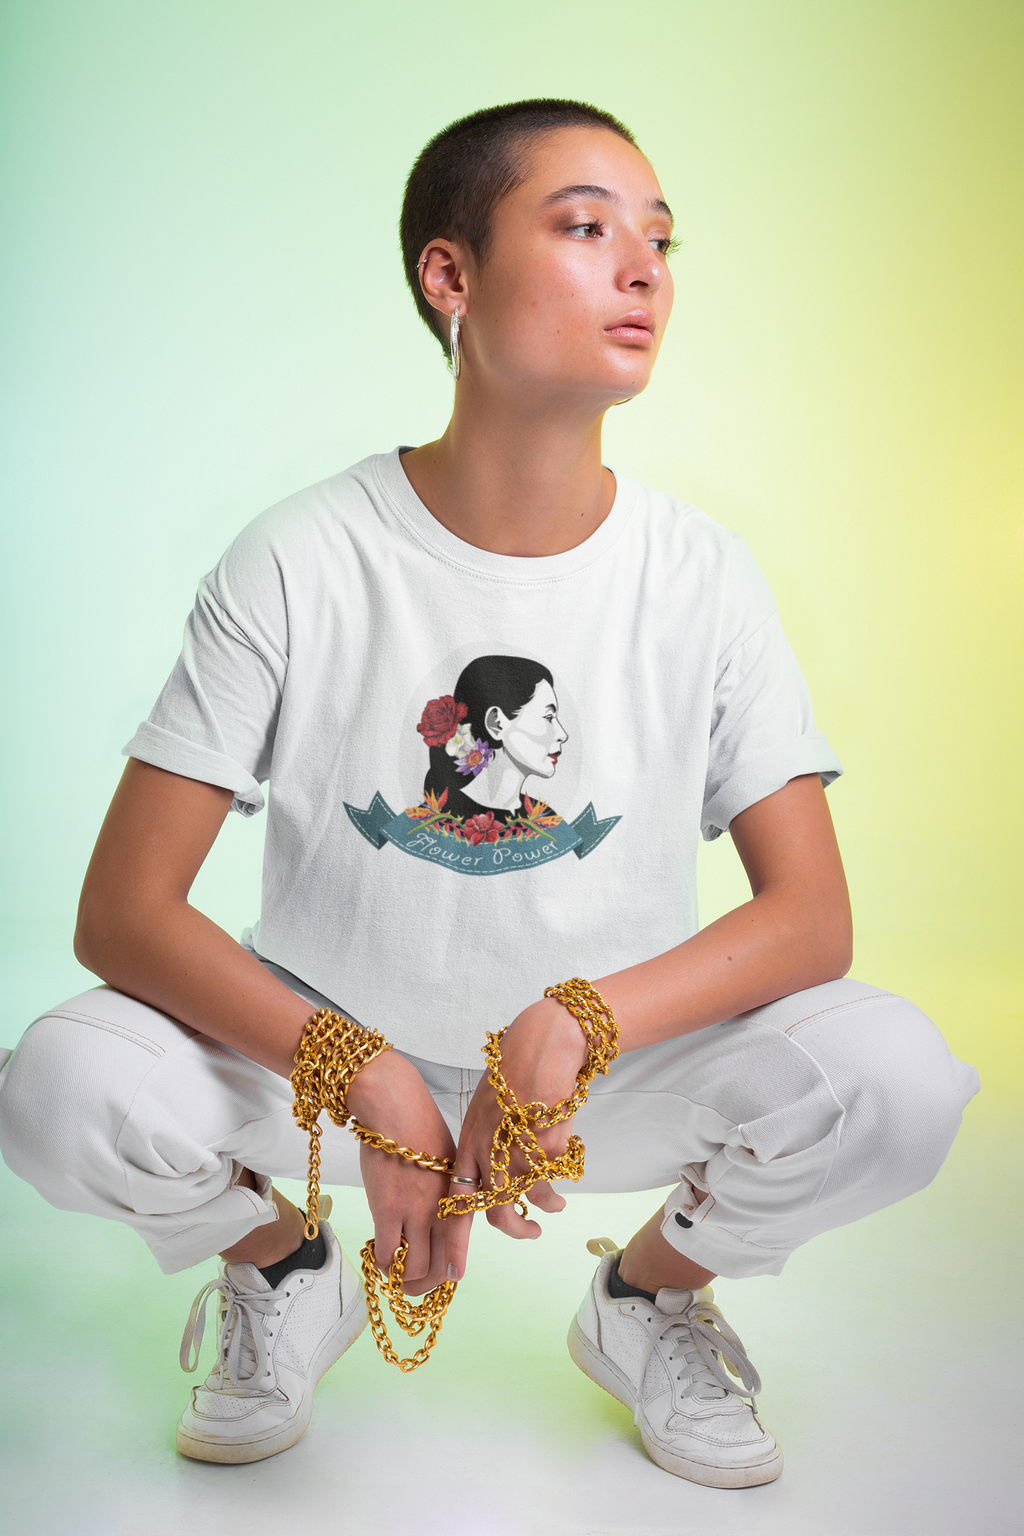 DAWN Myanmar's Daw Aung San Su Kyi T-shirt Design